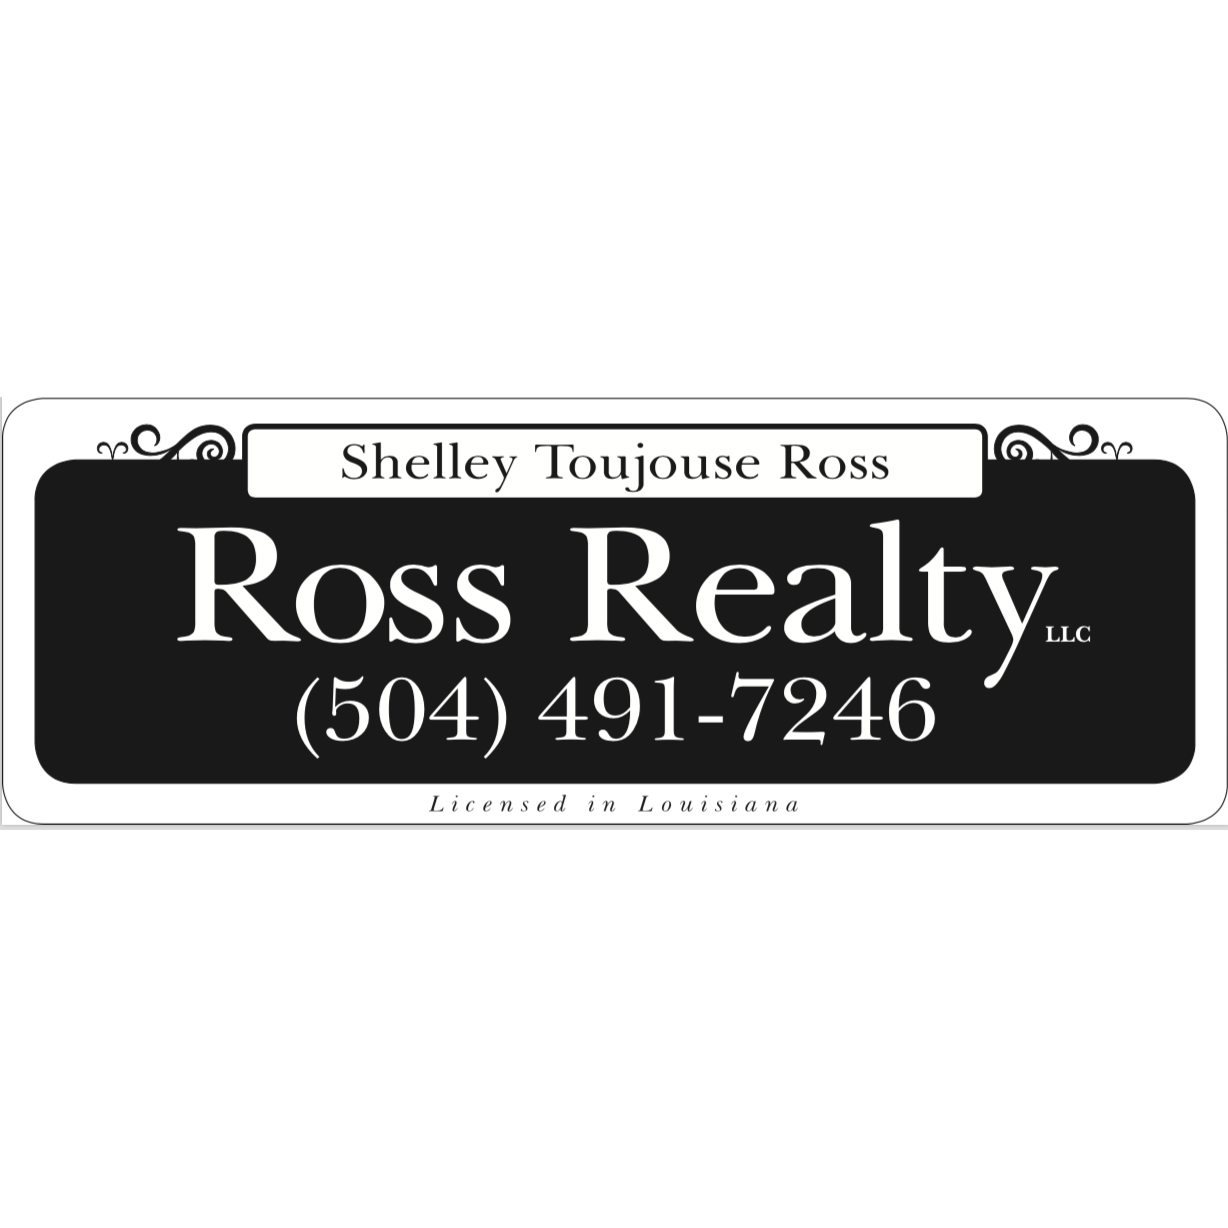 Shelley Toujouse Ross - Ross Realty, LLC